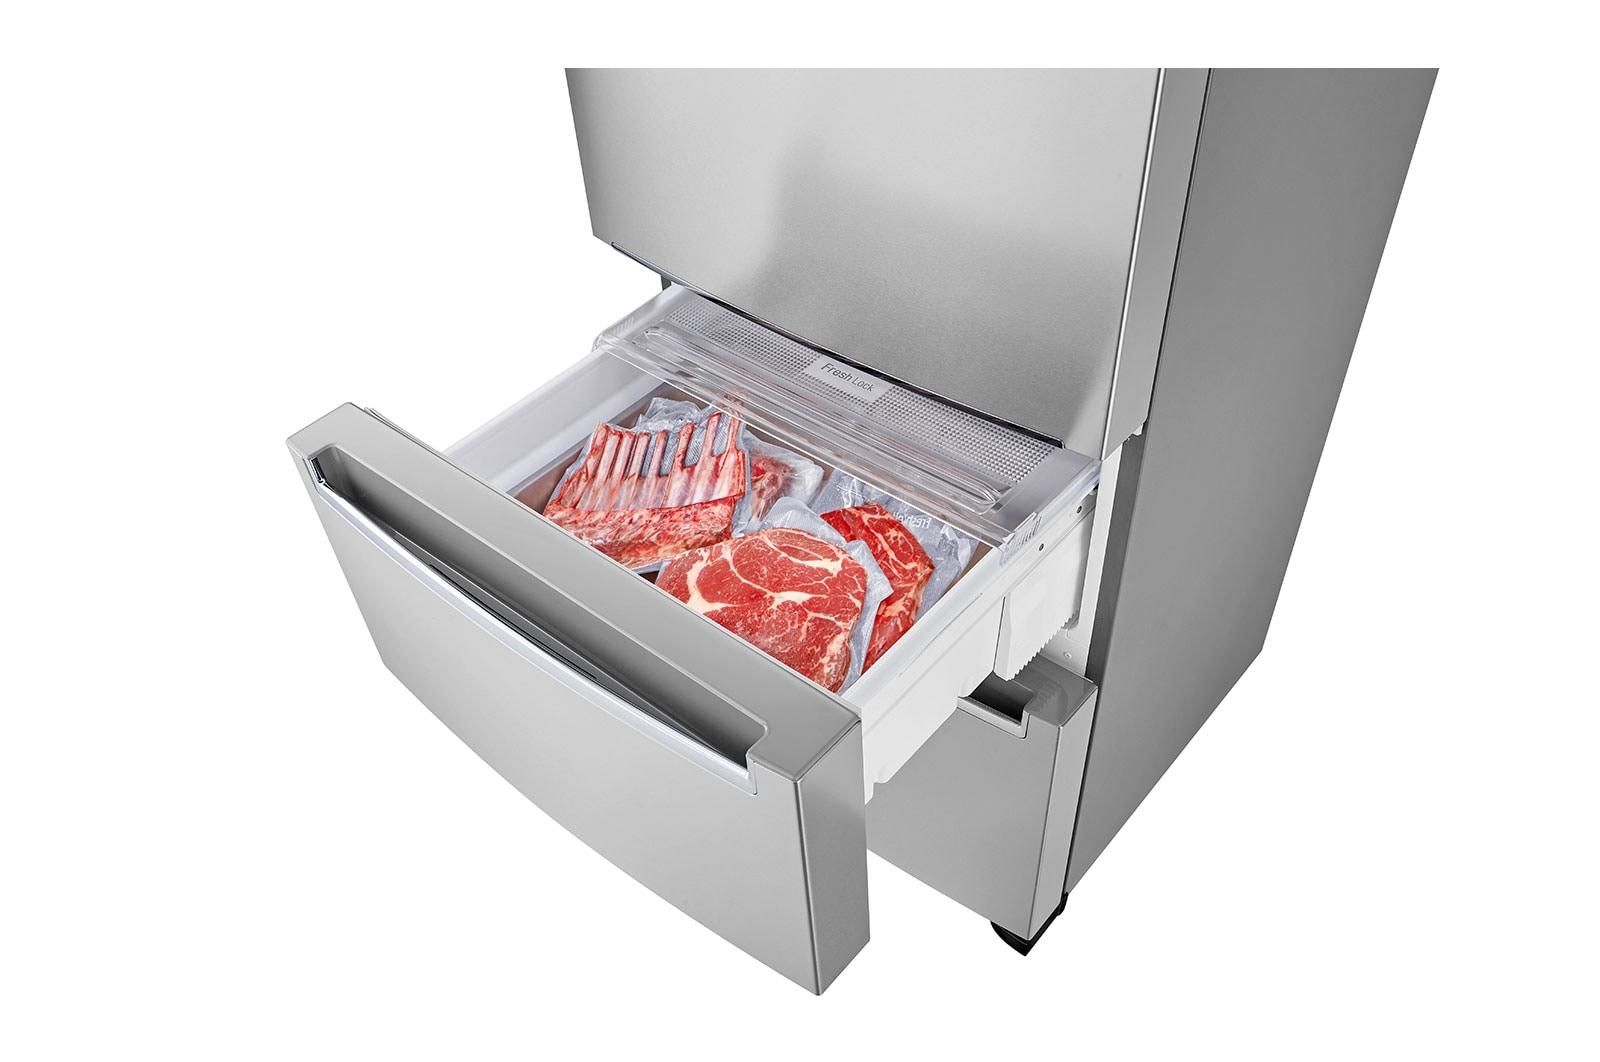 11.7 cu. ft. Kimchi/Specialty Food Refrigerator